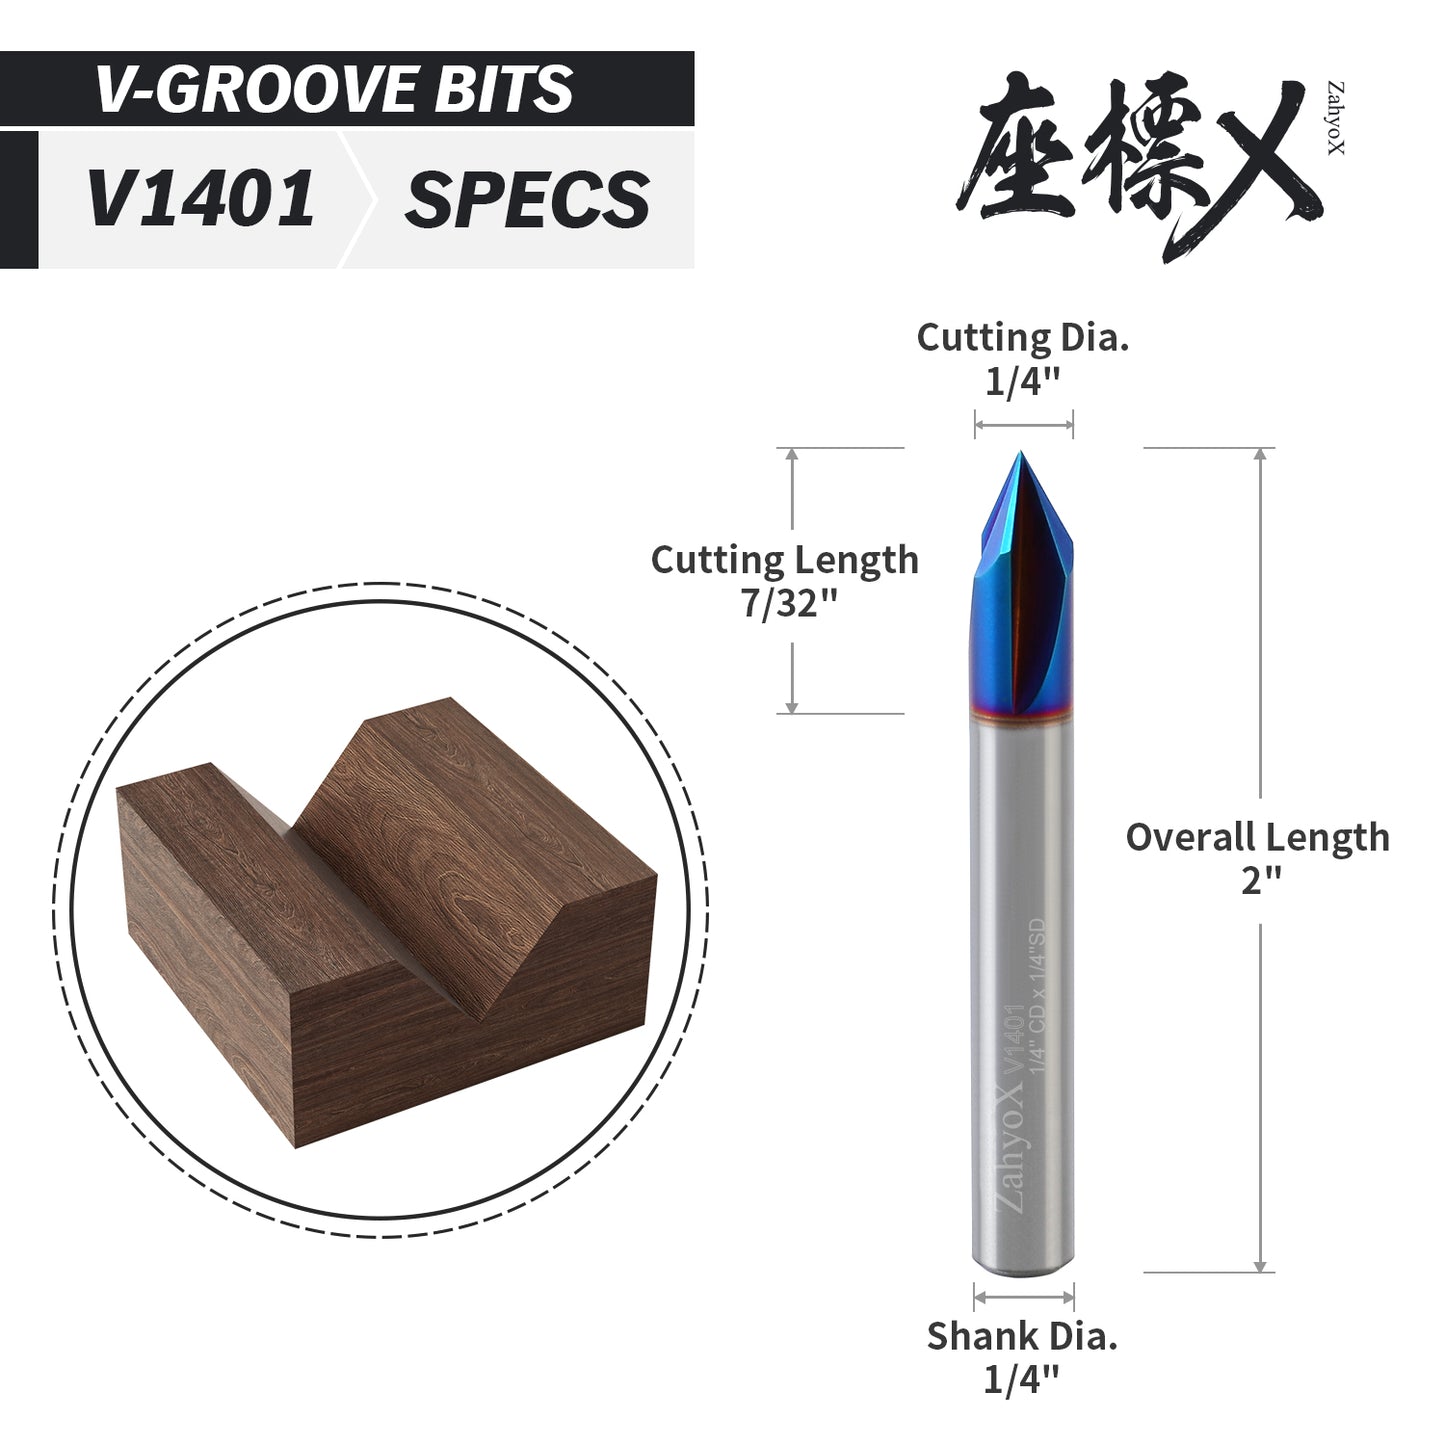 V1401 60 Degree Nano Coated V-Groove Carve Bit - 3 Flutes - 60°-  1/4 SD - 1/4 CD - 7/32 CL - 2 OL